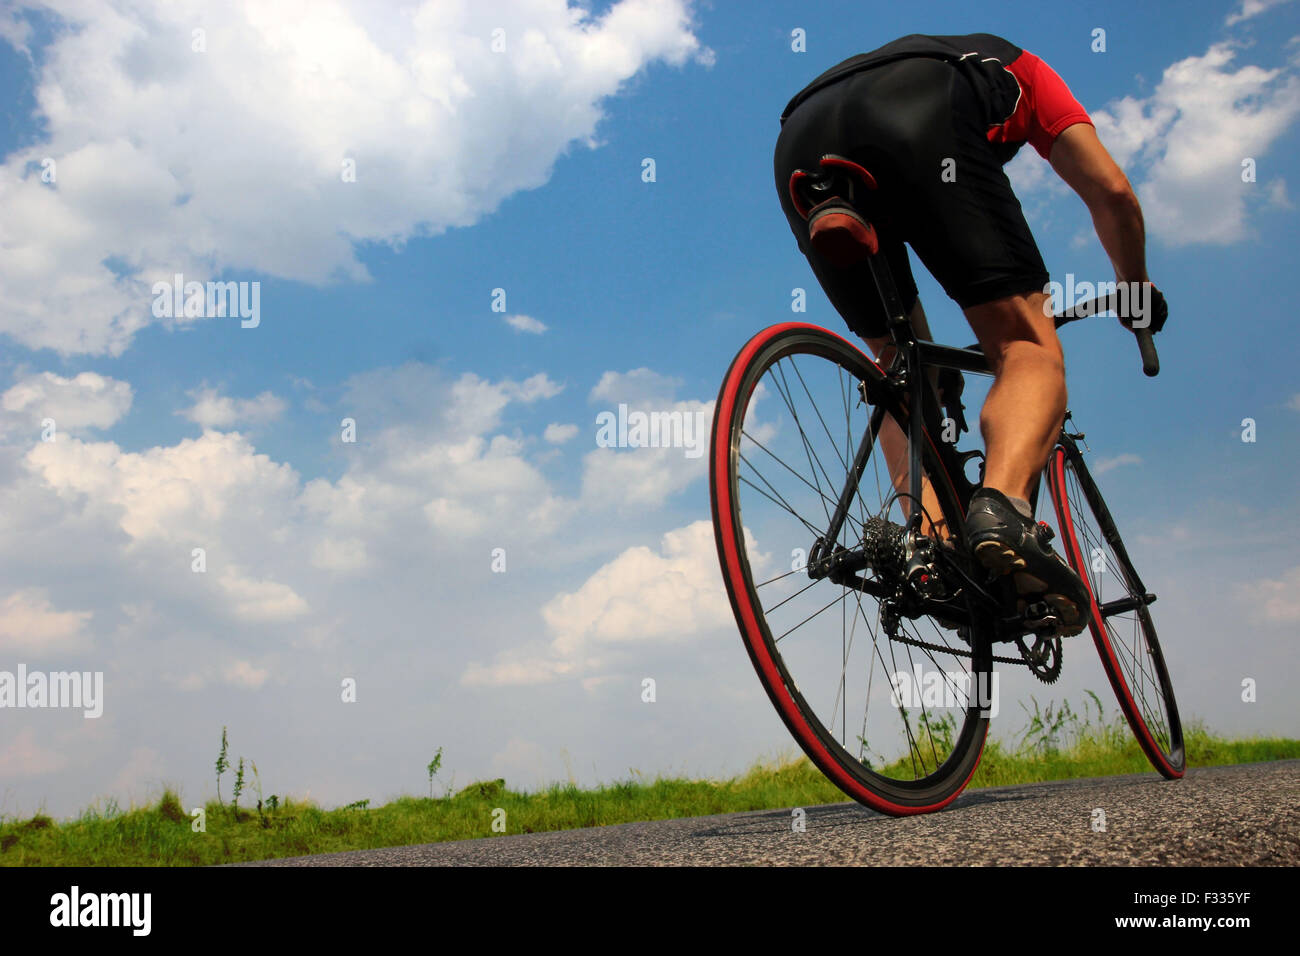 cyclist rides on asphalt road Stock Photo